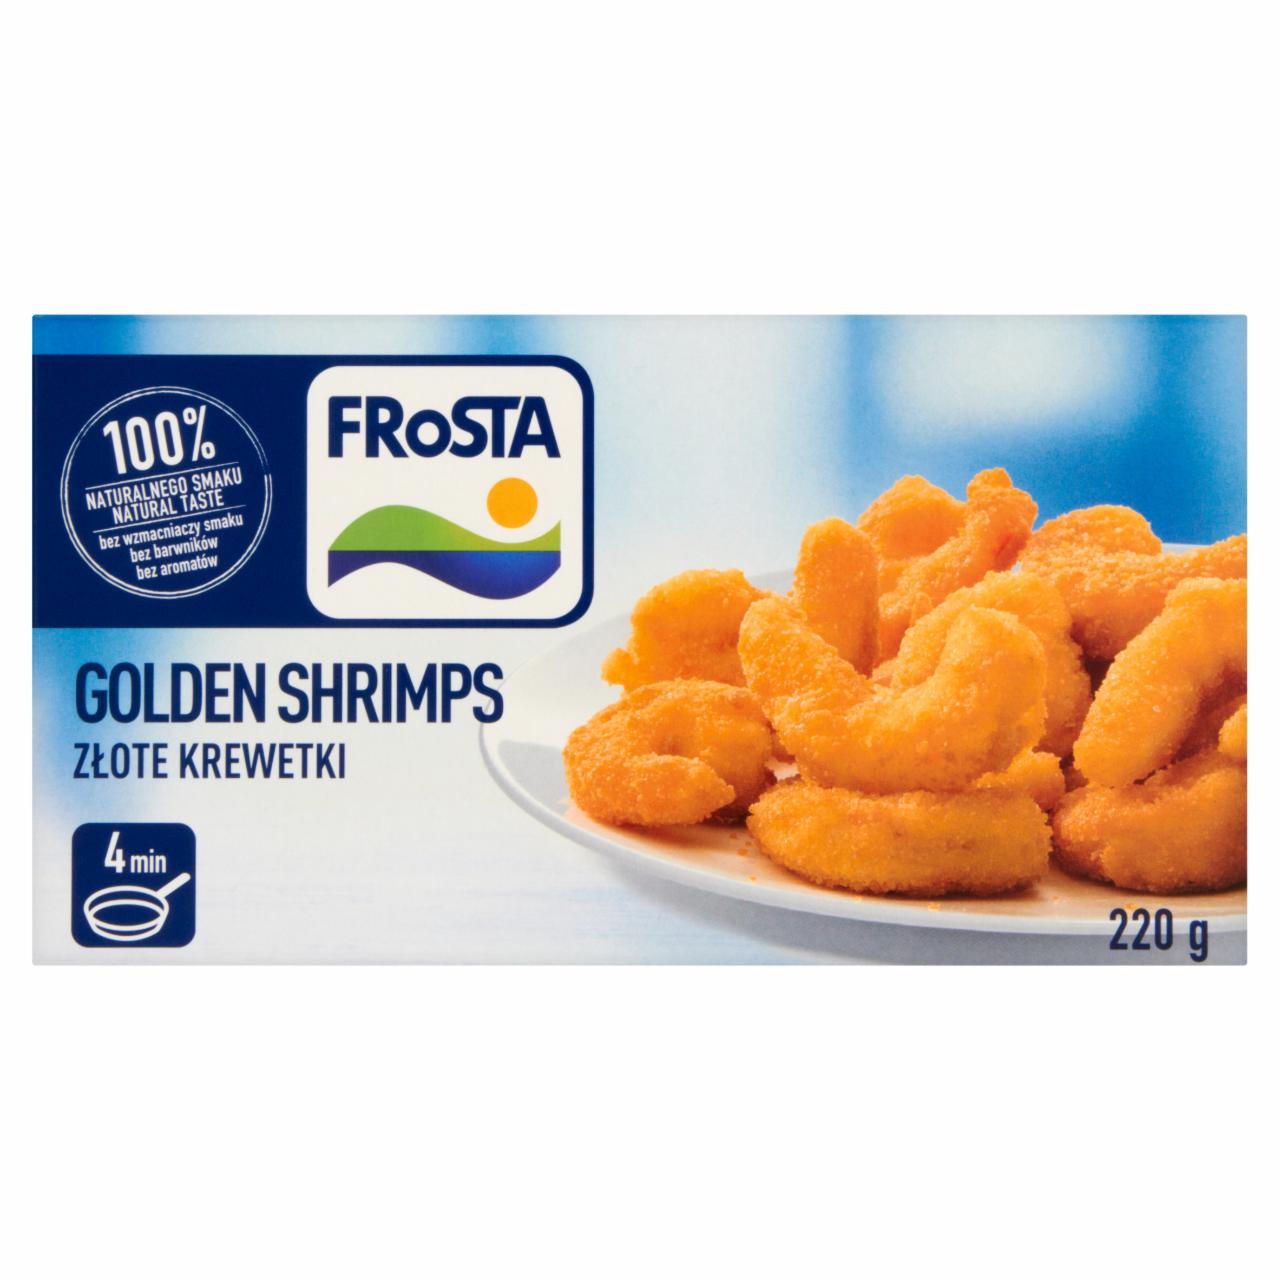 Photo - FRoSTA Golden Shrimps 220 g